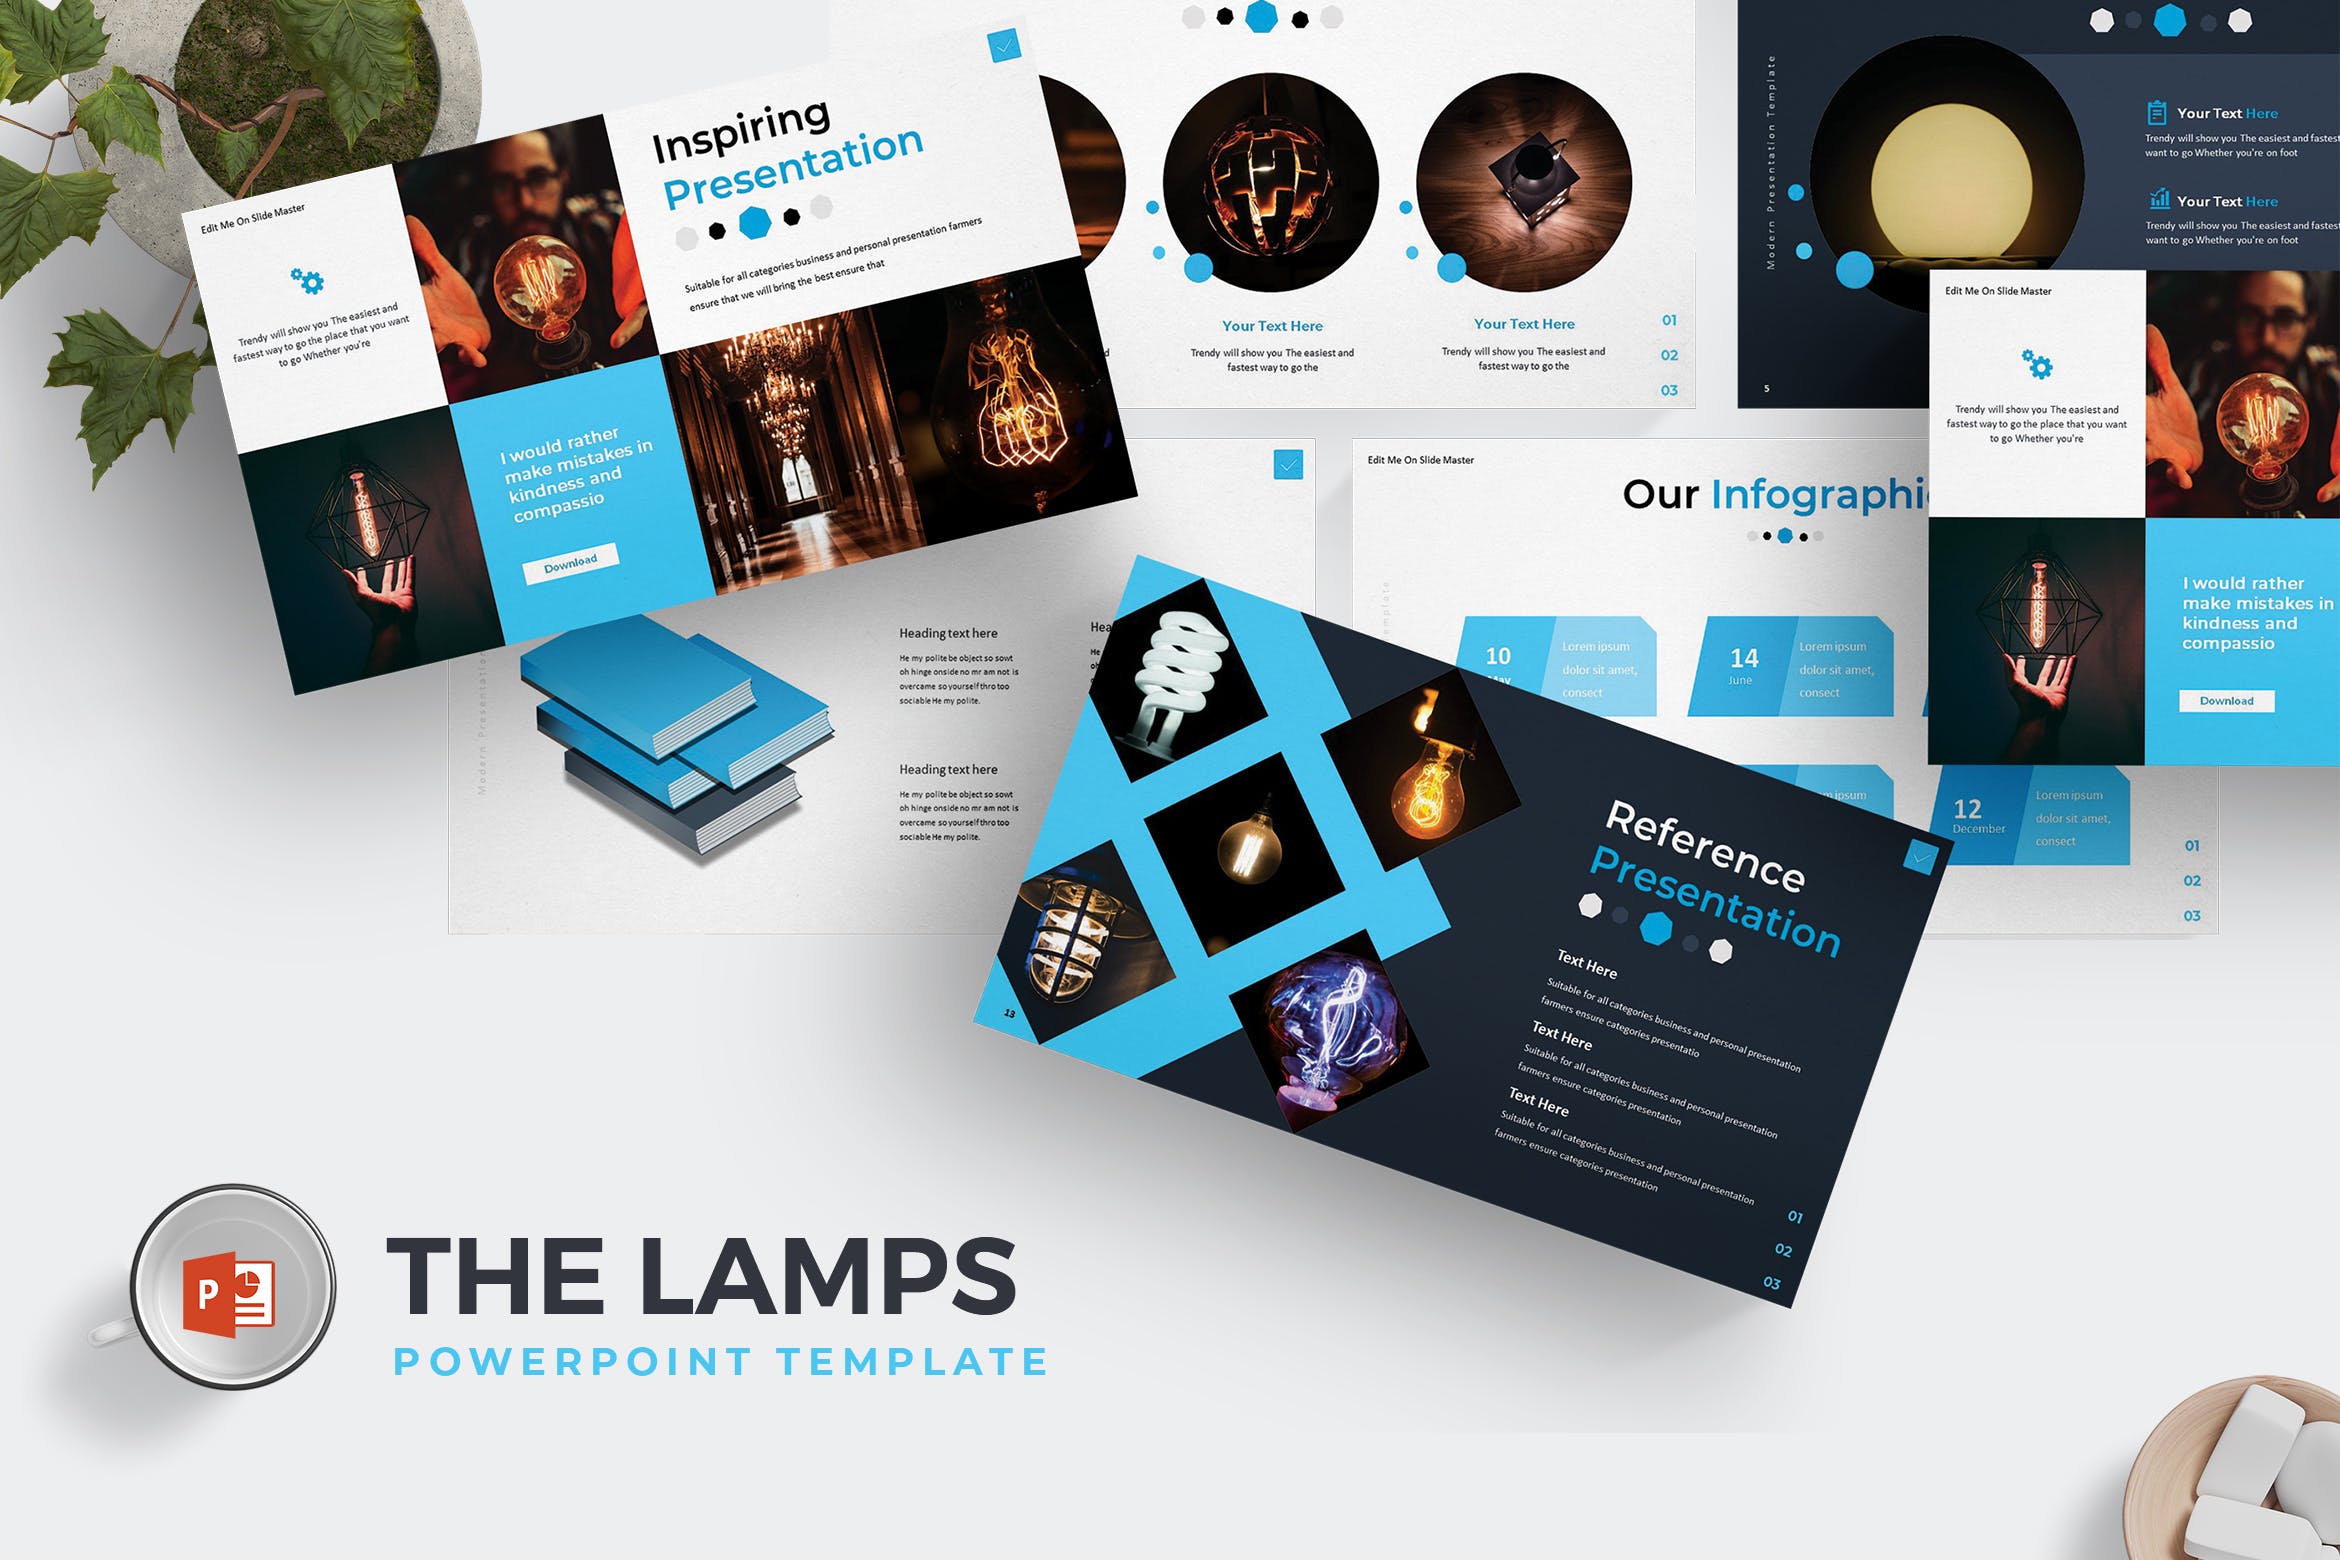 产品推广策划方案PPT幻灯片模板素材 The Lamps – Powerpoint Template插图